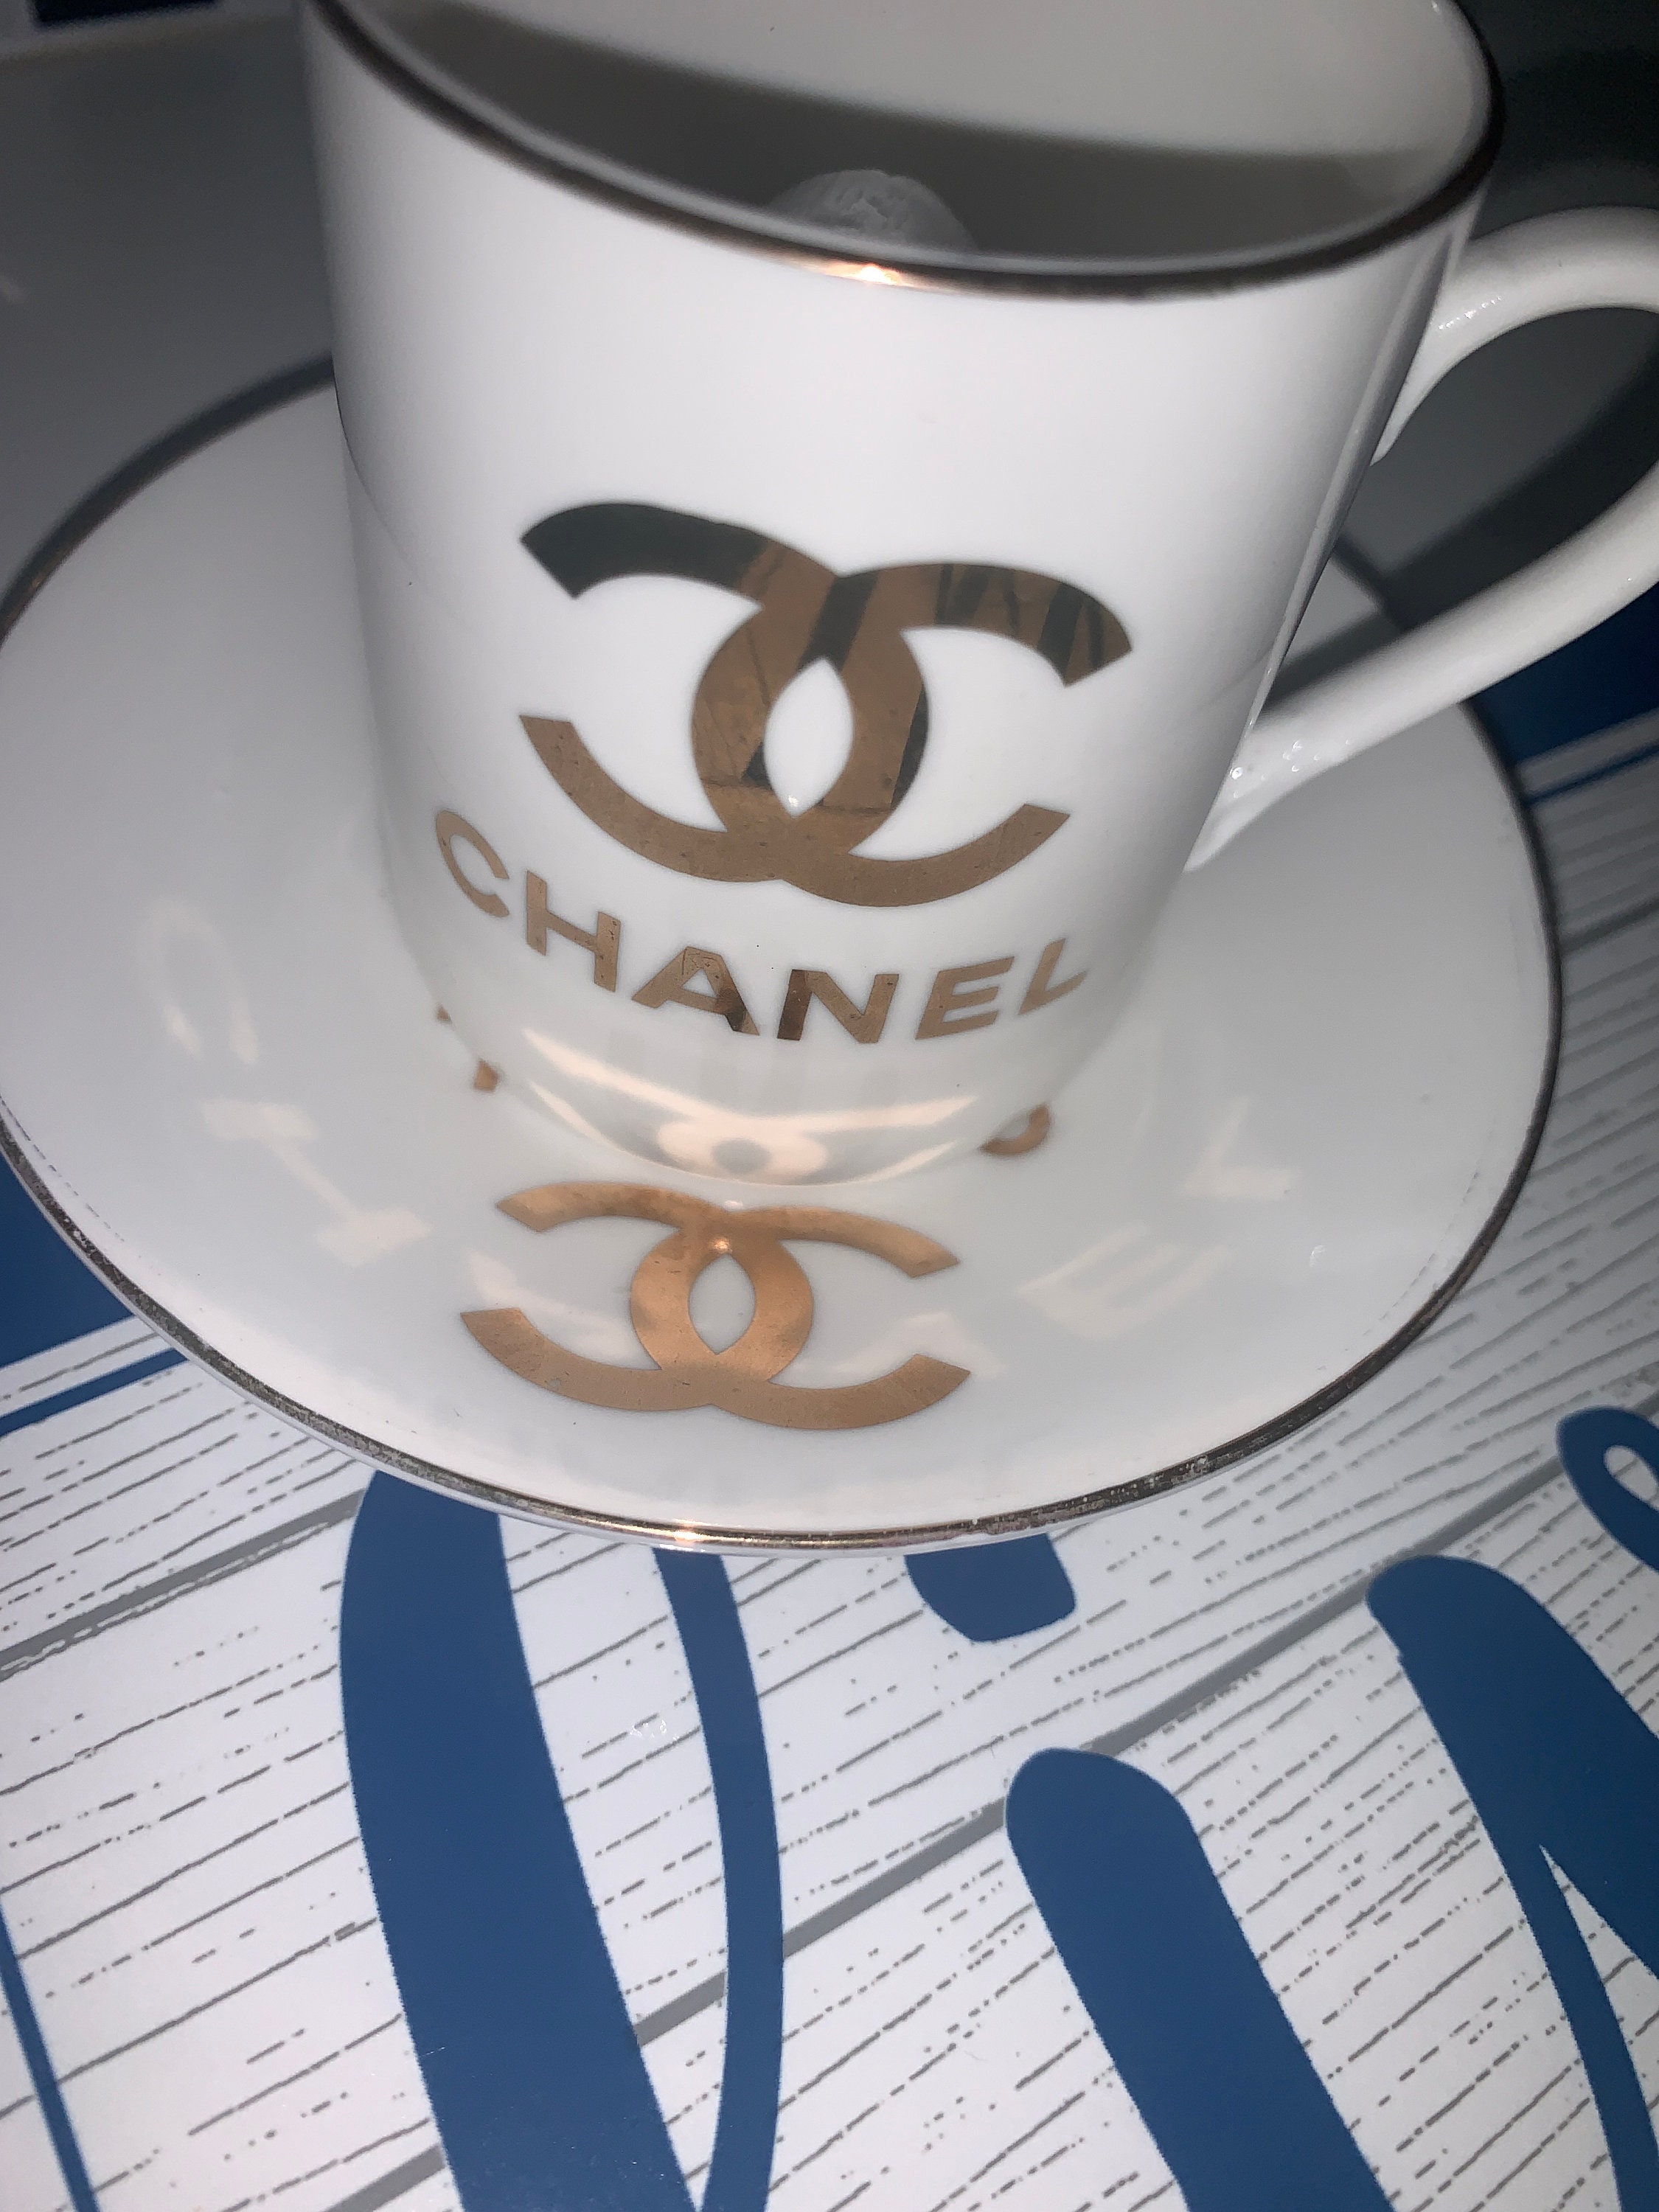 Chanel Tea Cup Set: Cup & Saucer